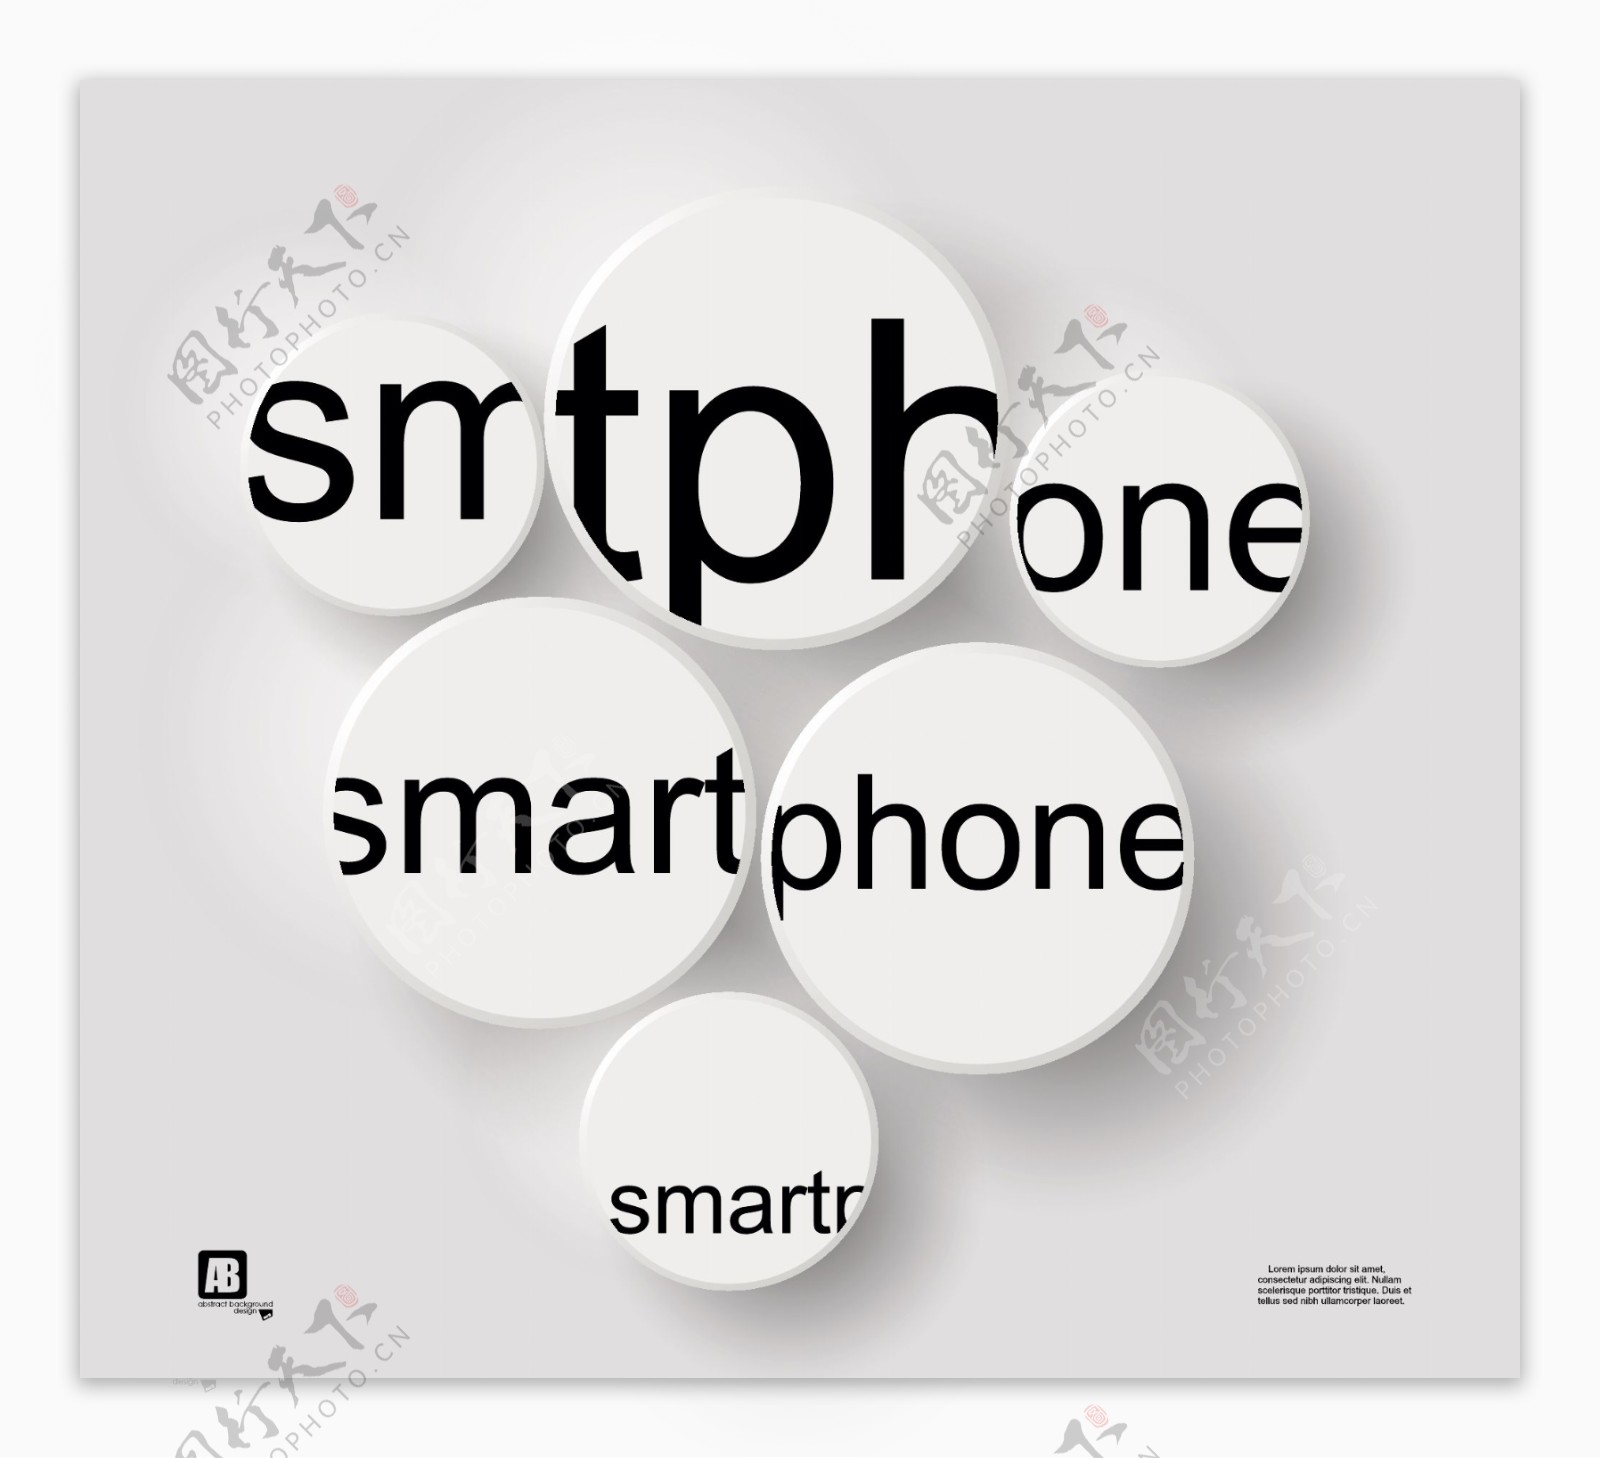 smartphone字母立体背景